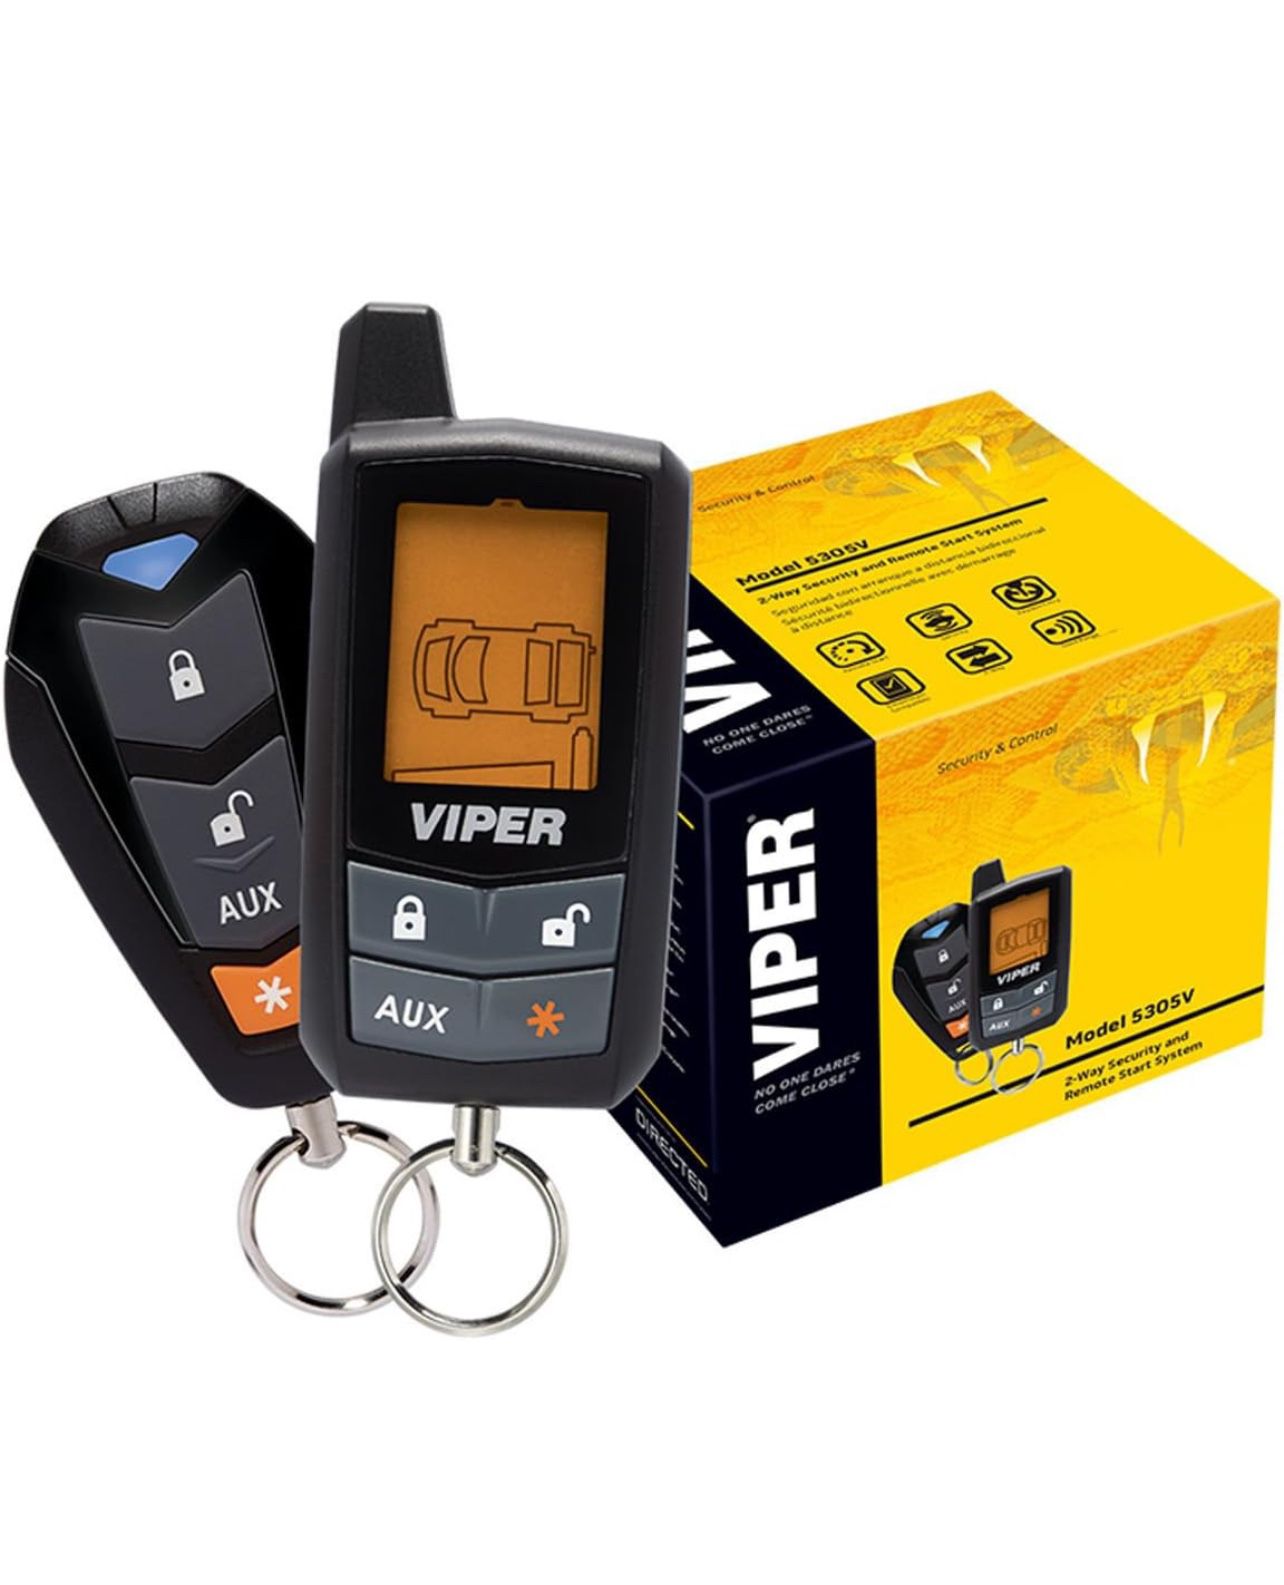 Viper 5305V 2 Way LCD Vehicle Car Alarm Keyless Entry Remorte Start System